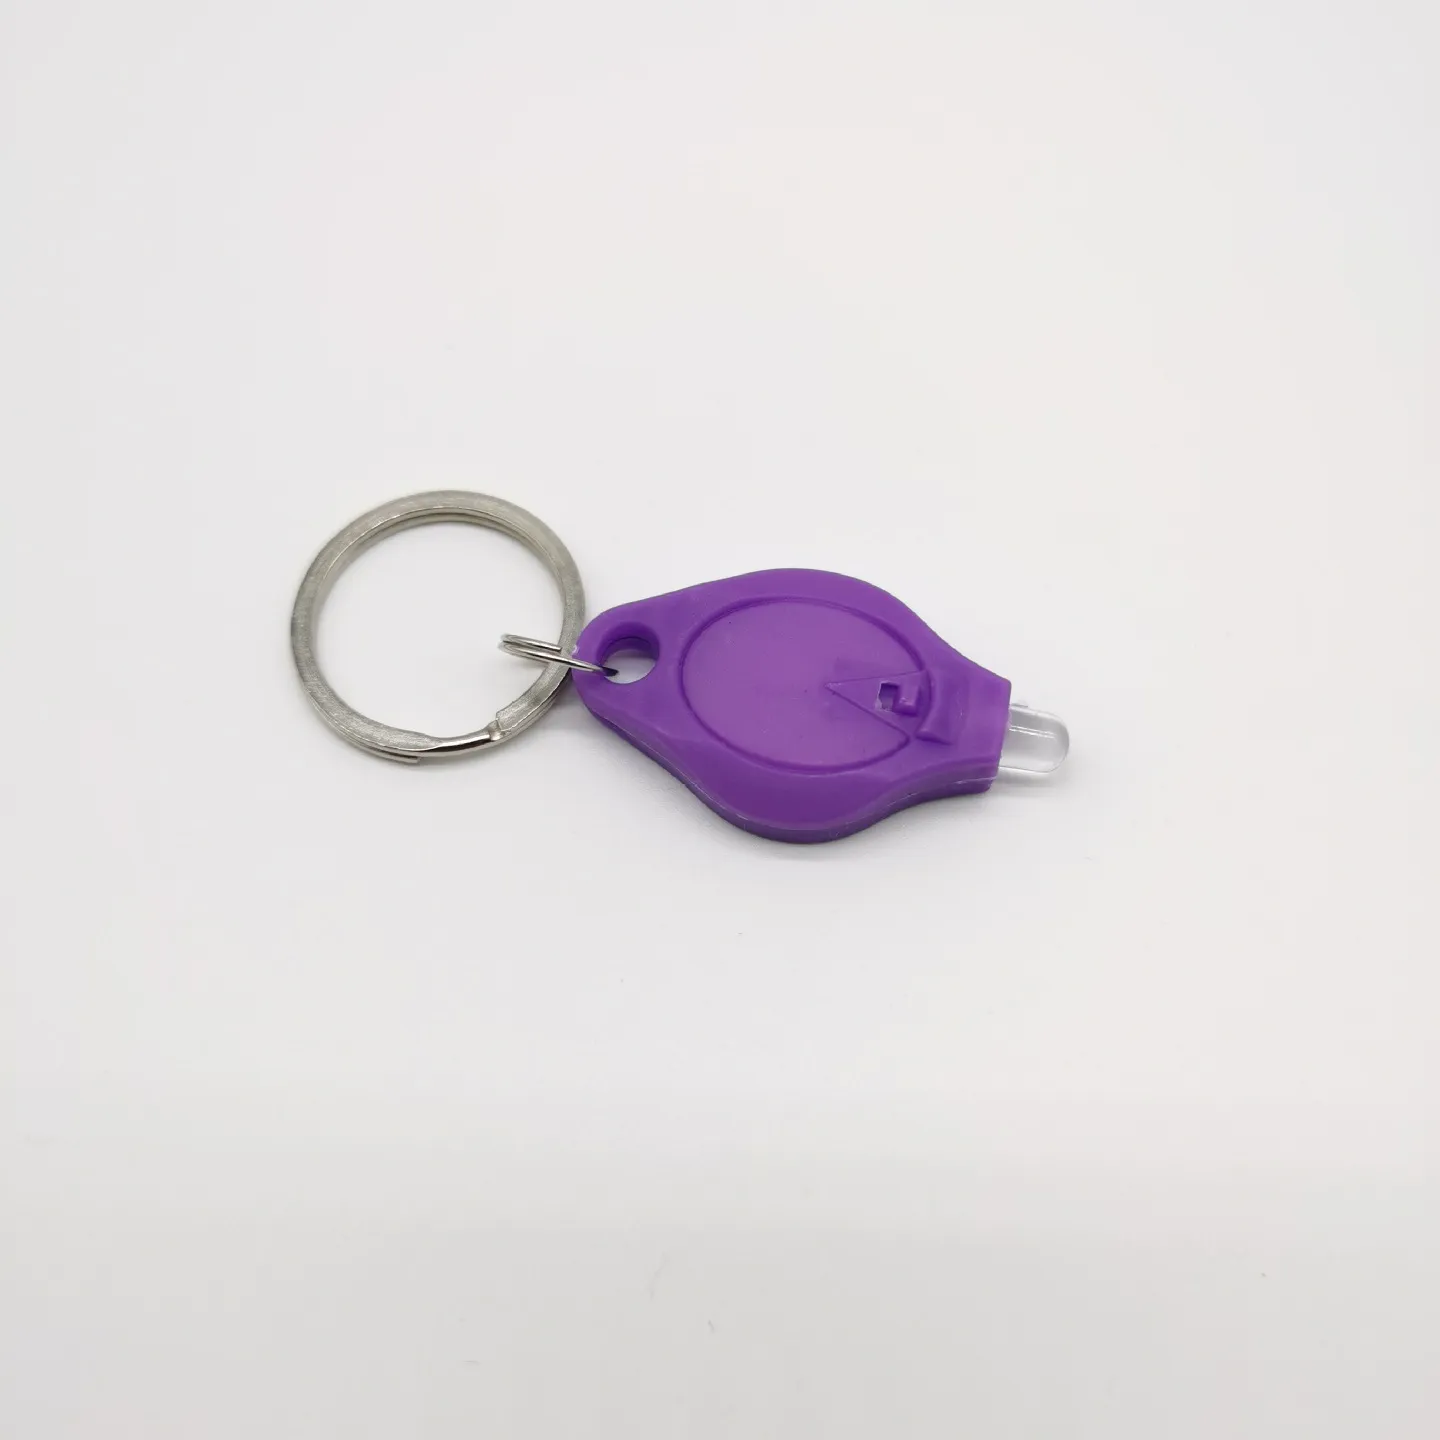 UV Mini Keychain LED Multicolor Flashlight Torch Light Lamp White And Purple Key Ring Light UV Flashlight Ultraviolet